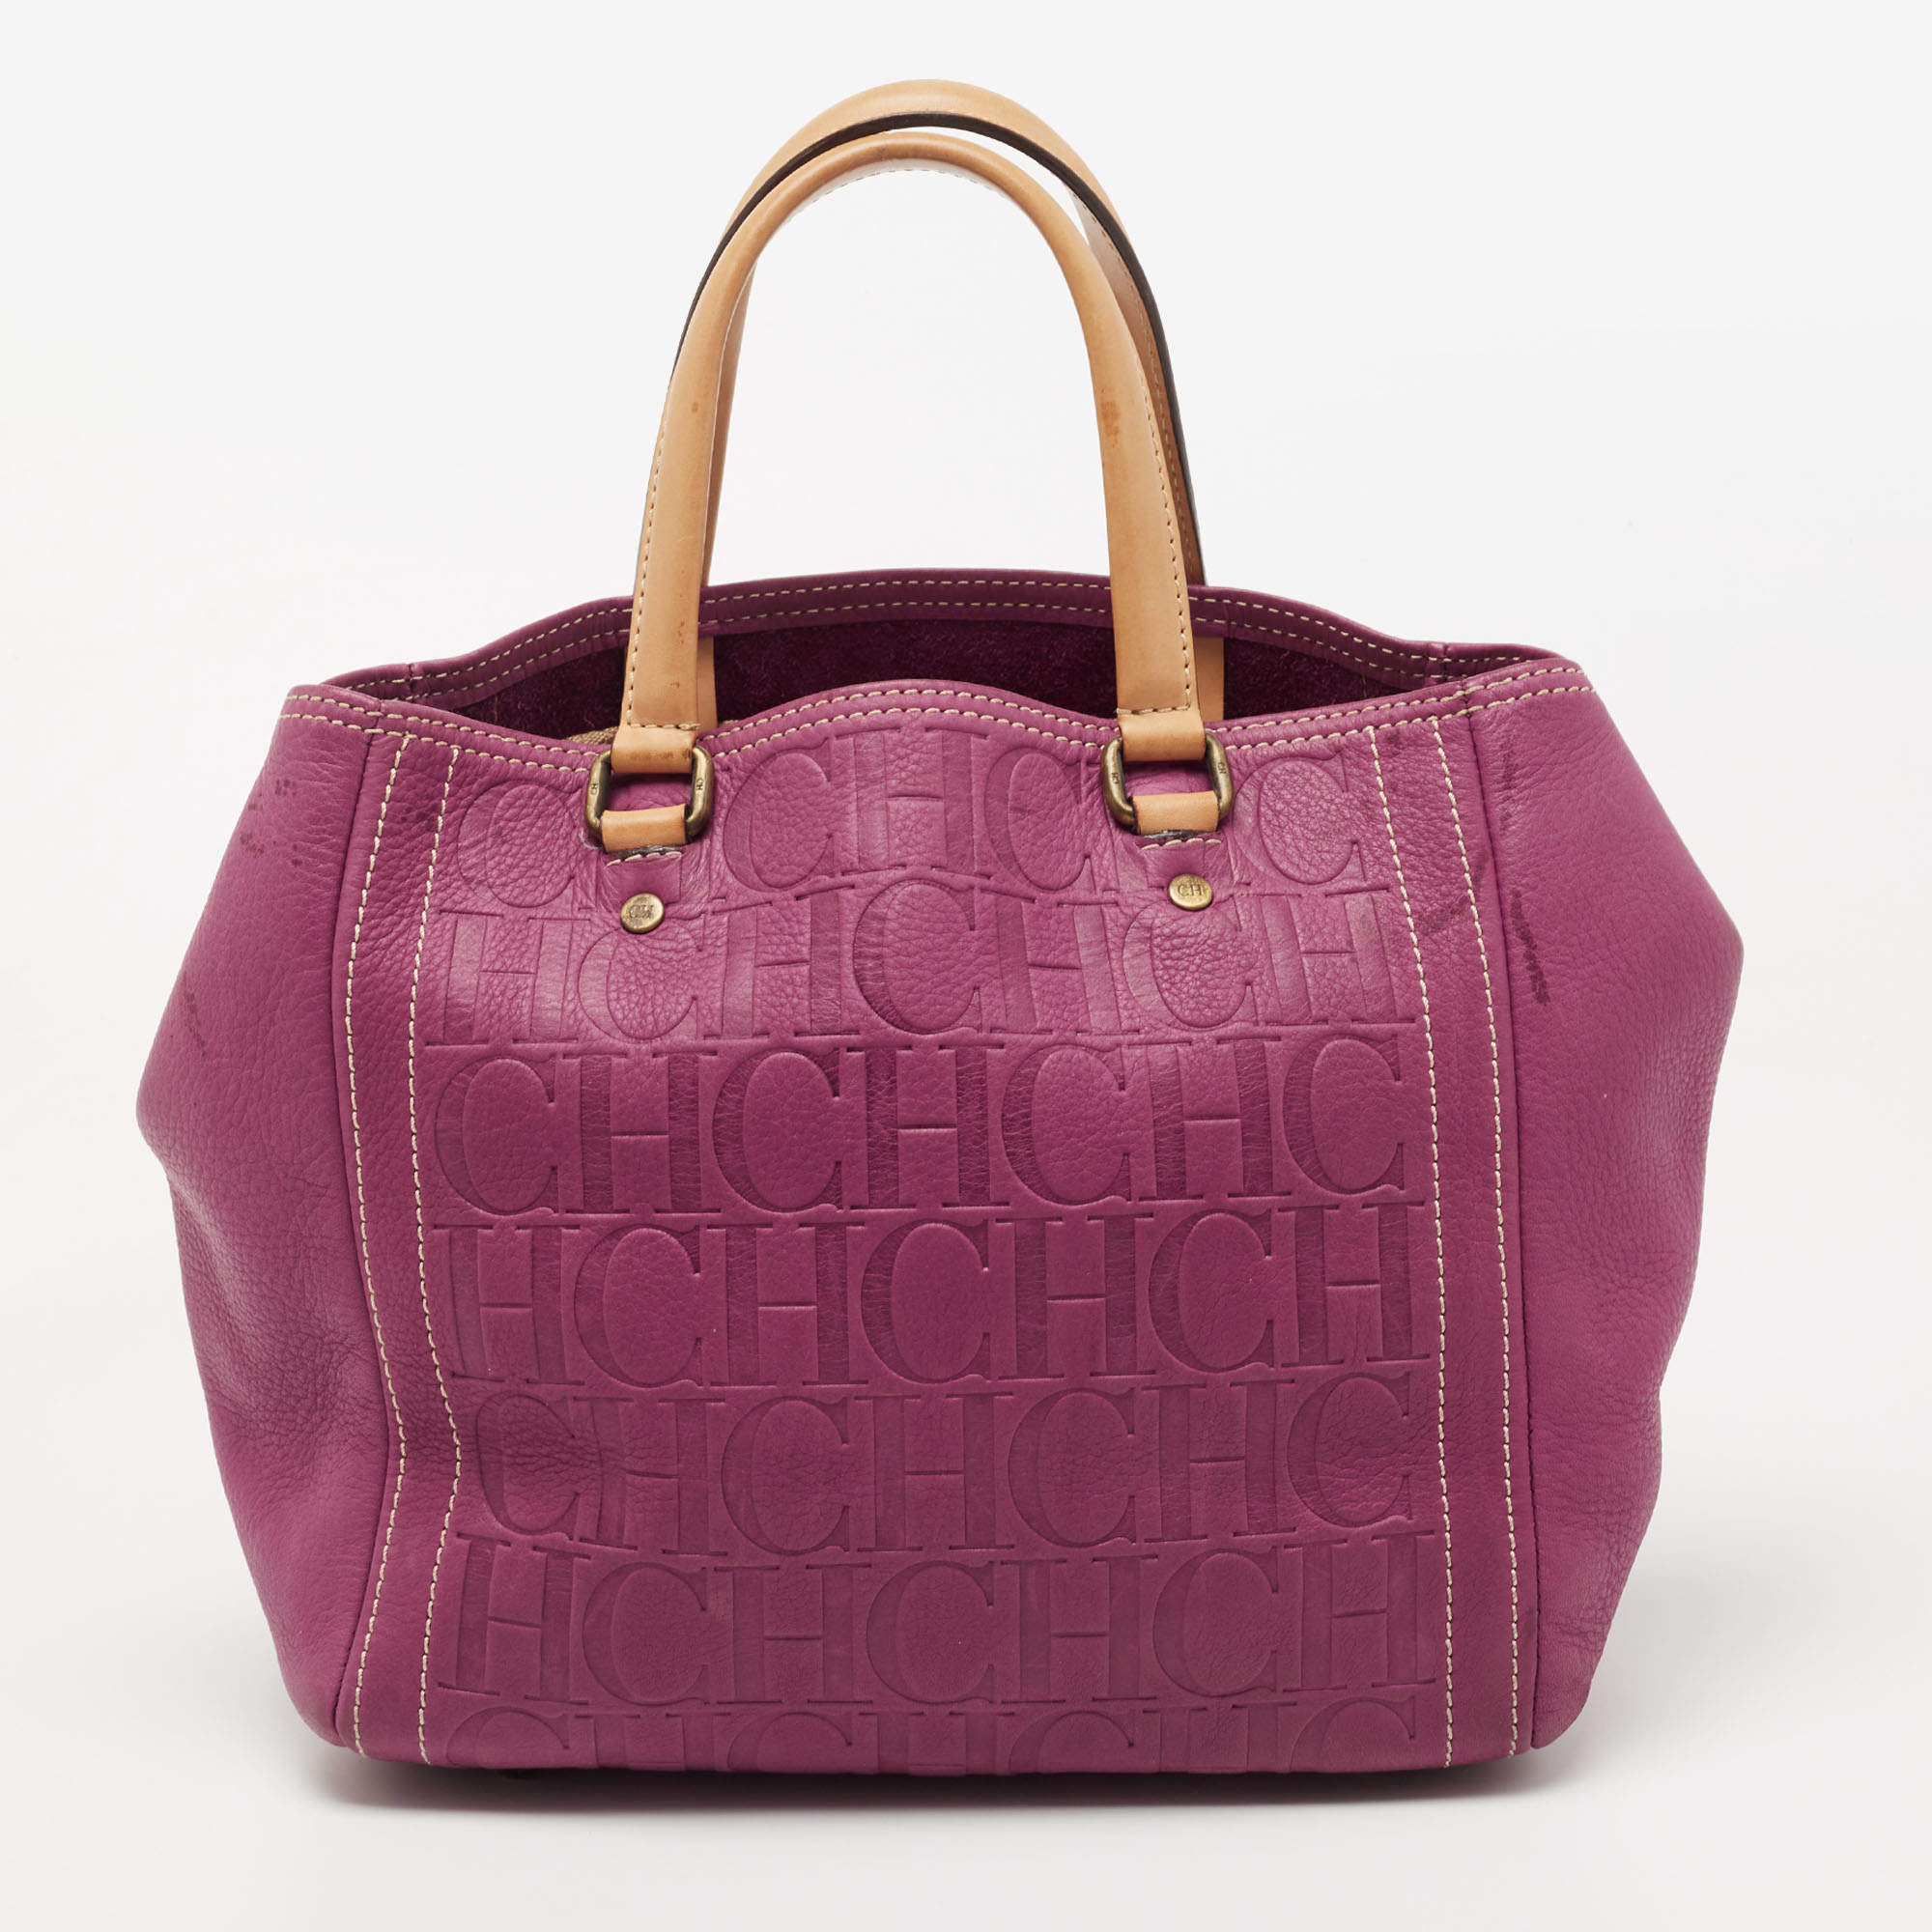 New 100% Authentic Carolina Herrera Andy 10 Purple Handbag  Carolina  herrera handbags, Carolina herrera, Purple handbags